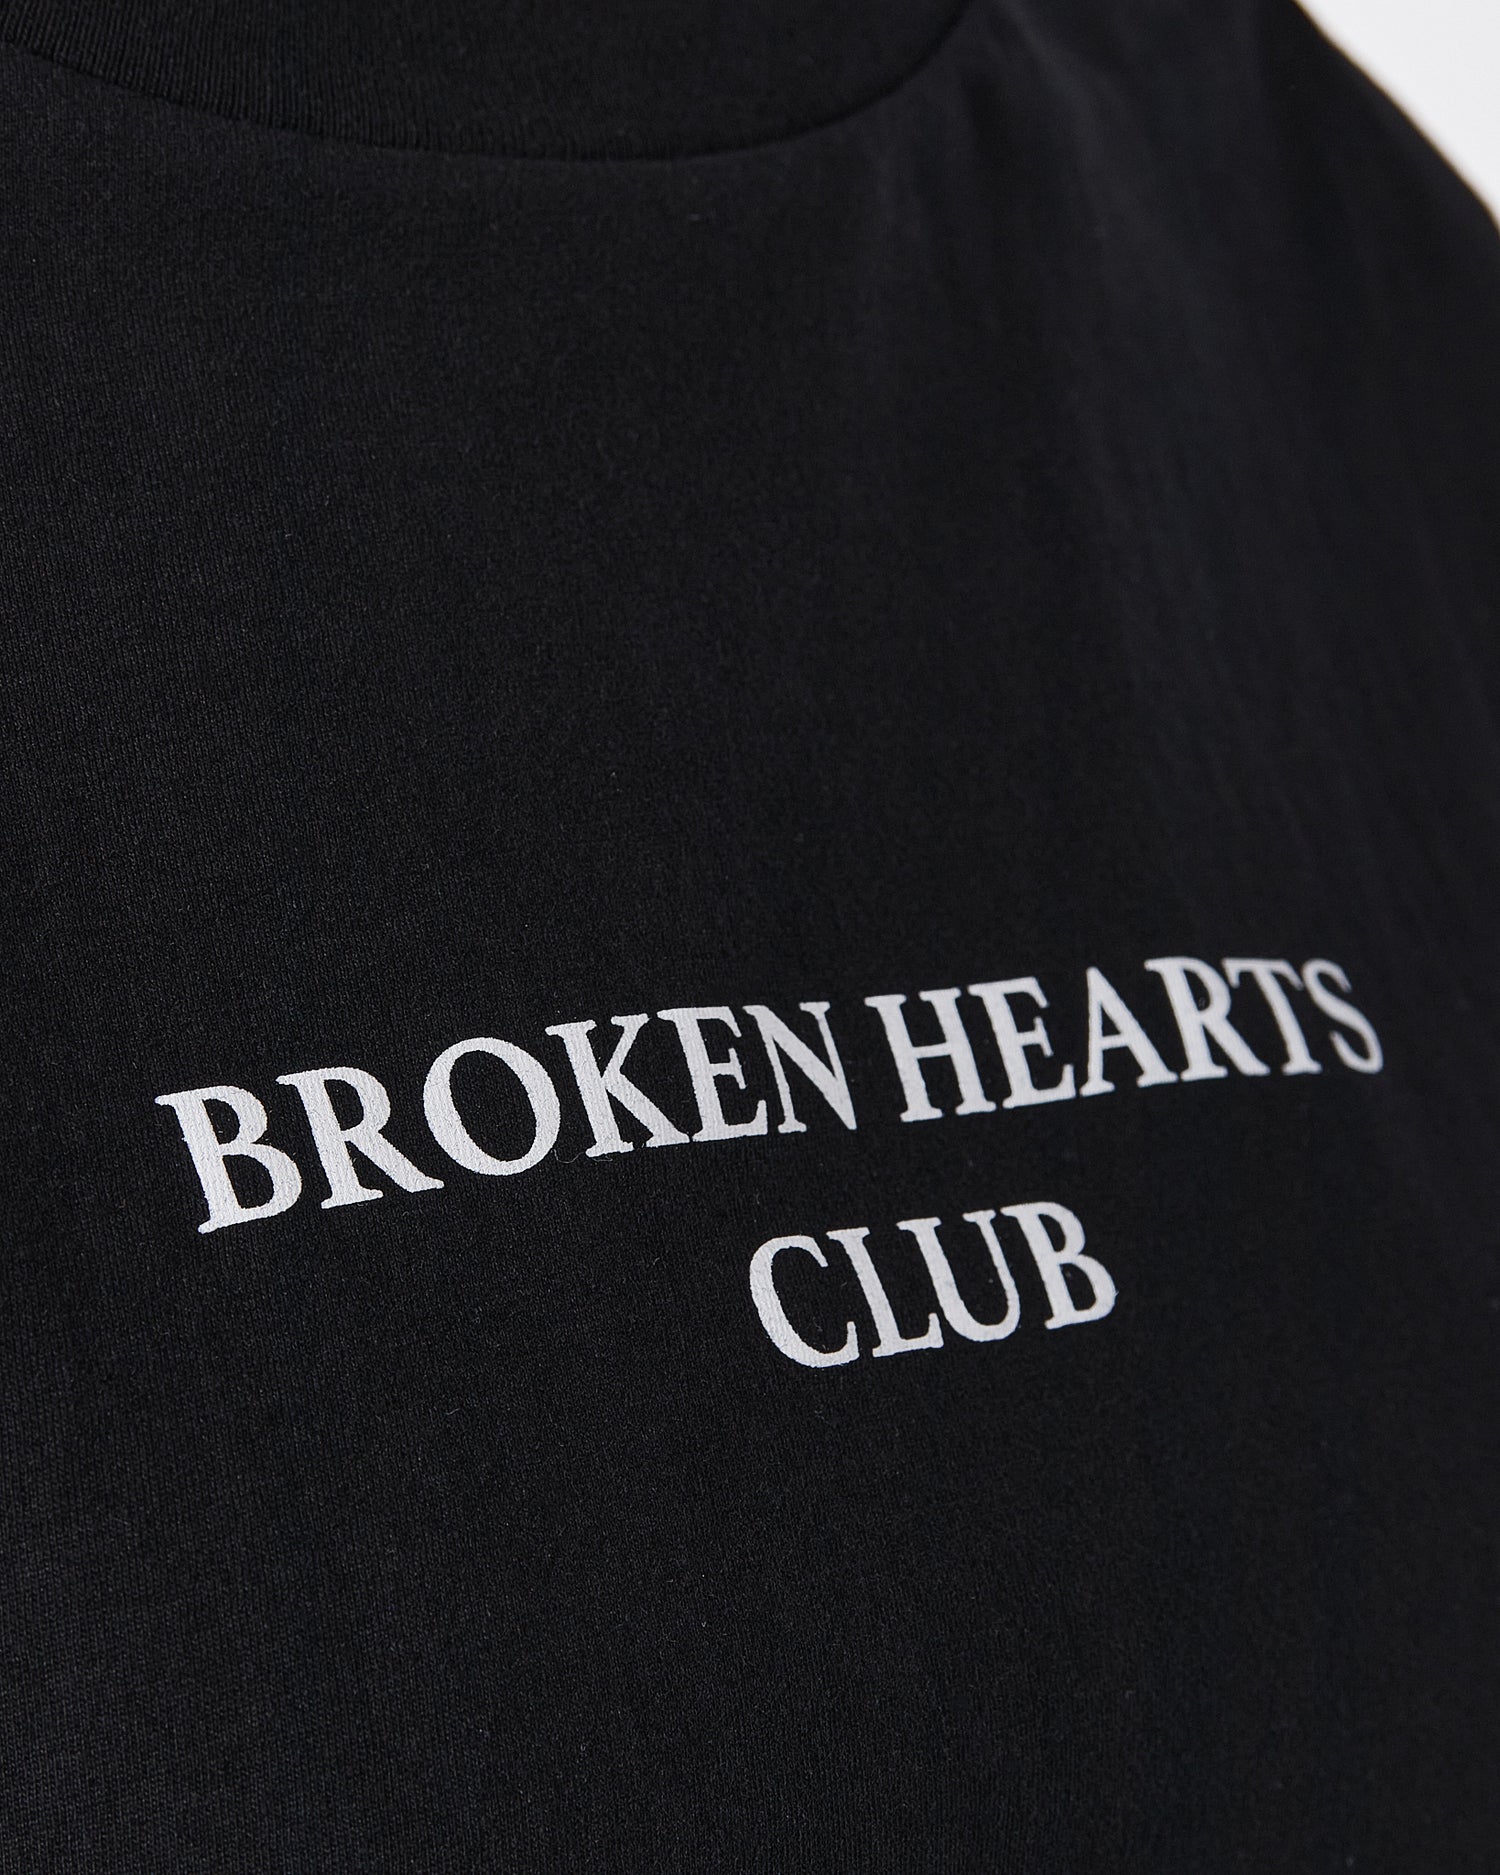 Broken Heart Club Lady Black T-Shirt Crop Top 9.90